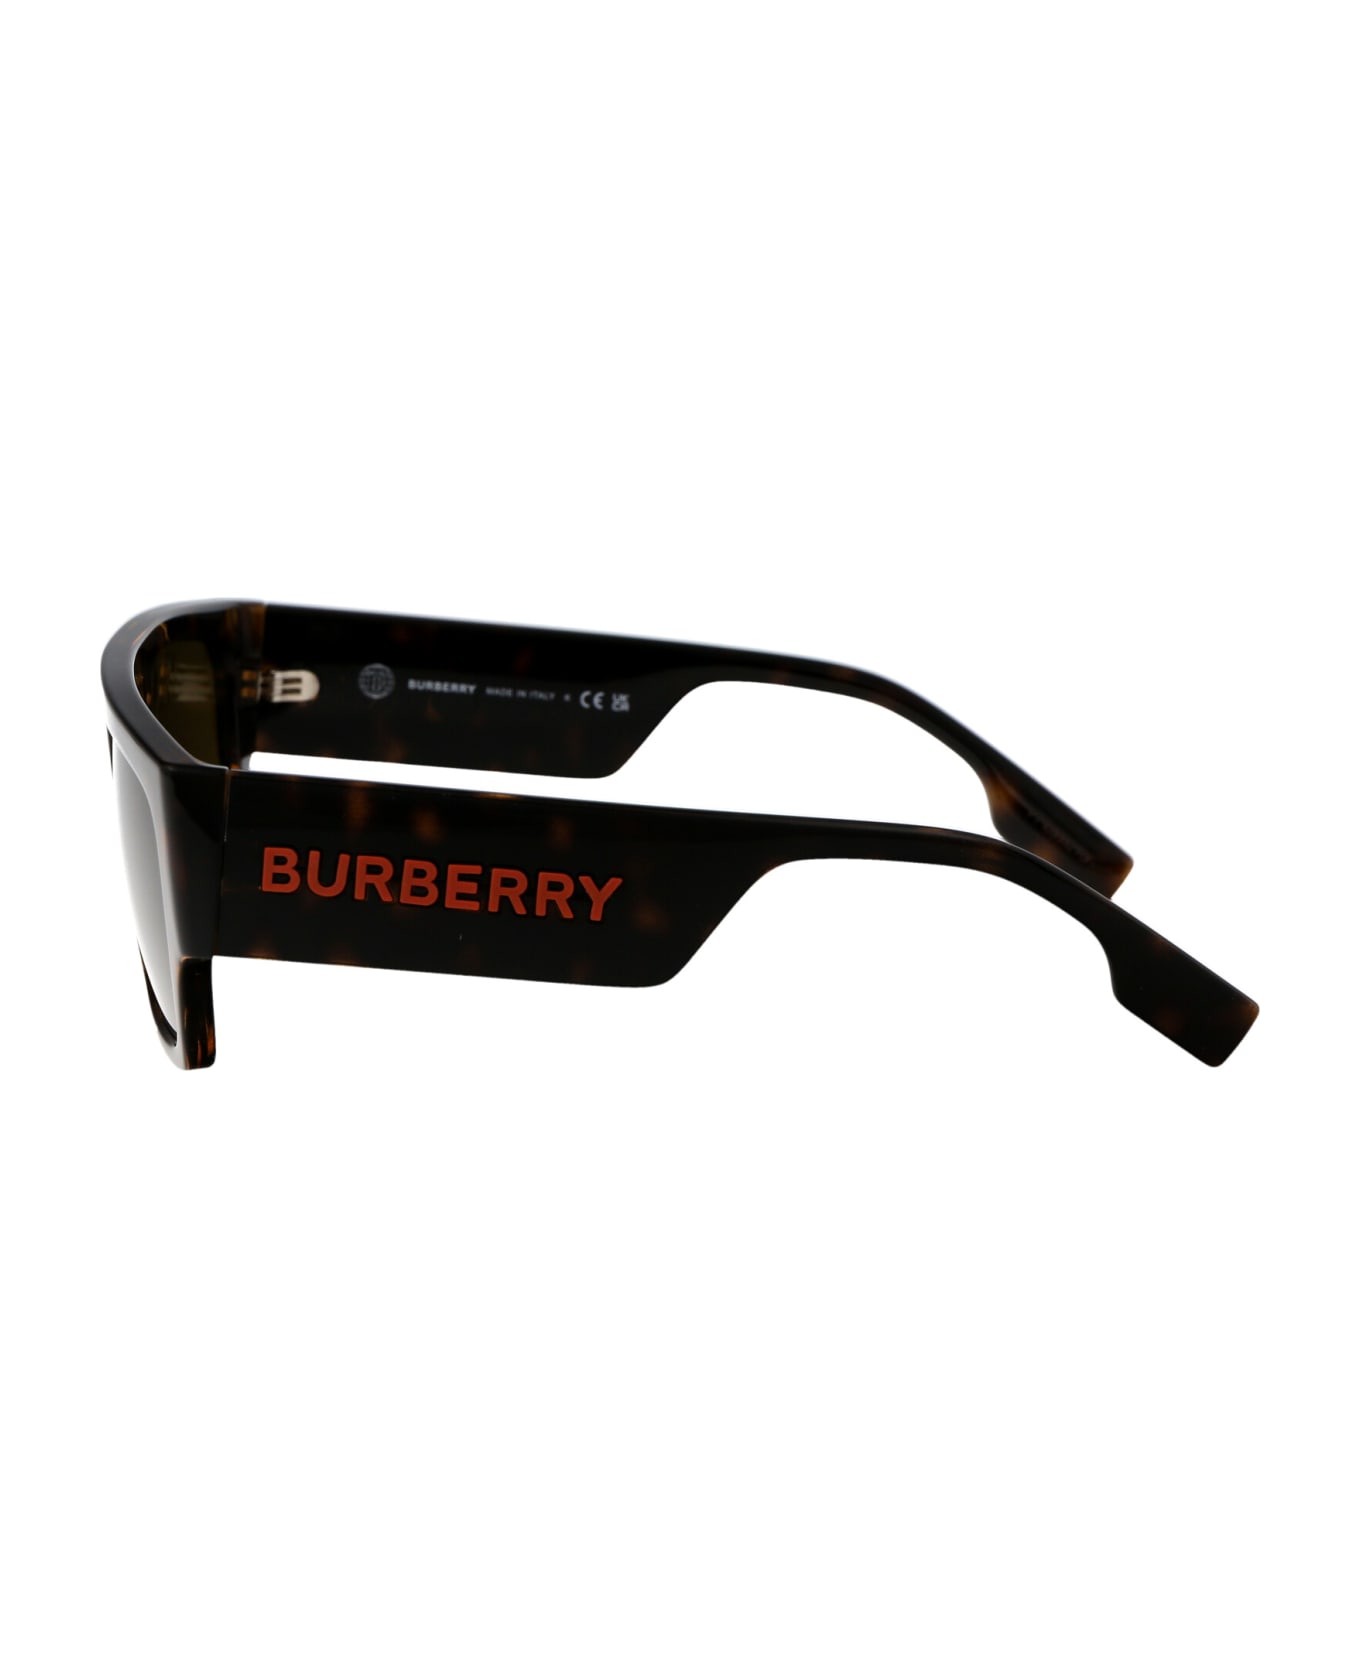 Burberry Eyewear Micah Sunglasses - 300273 DARK HAVANA